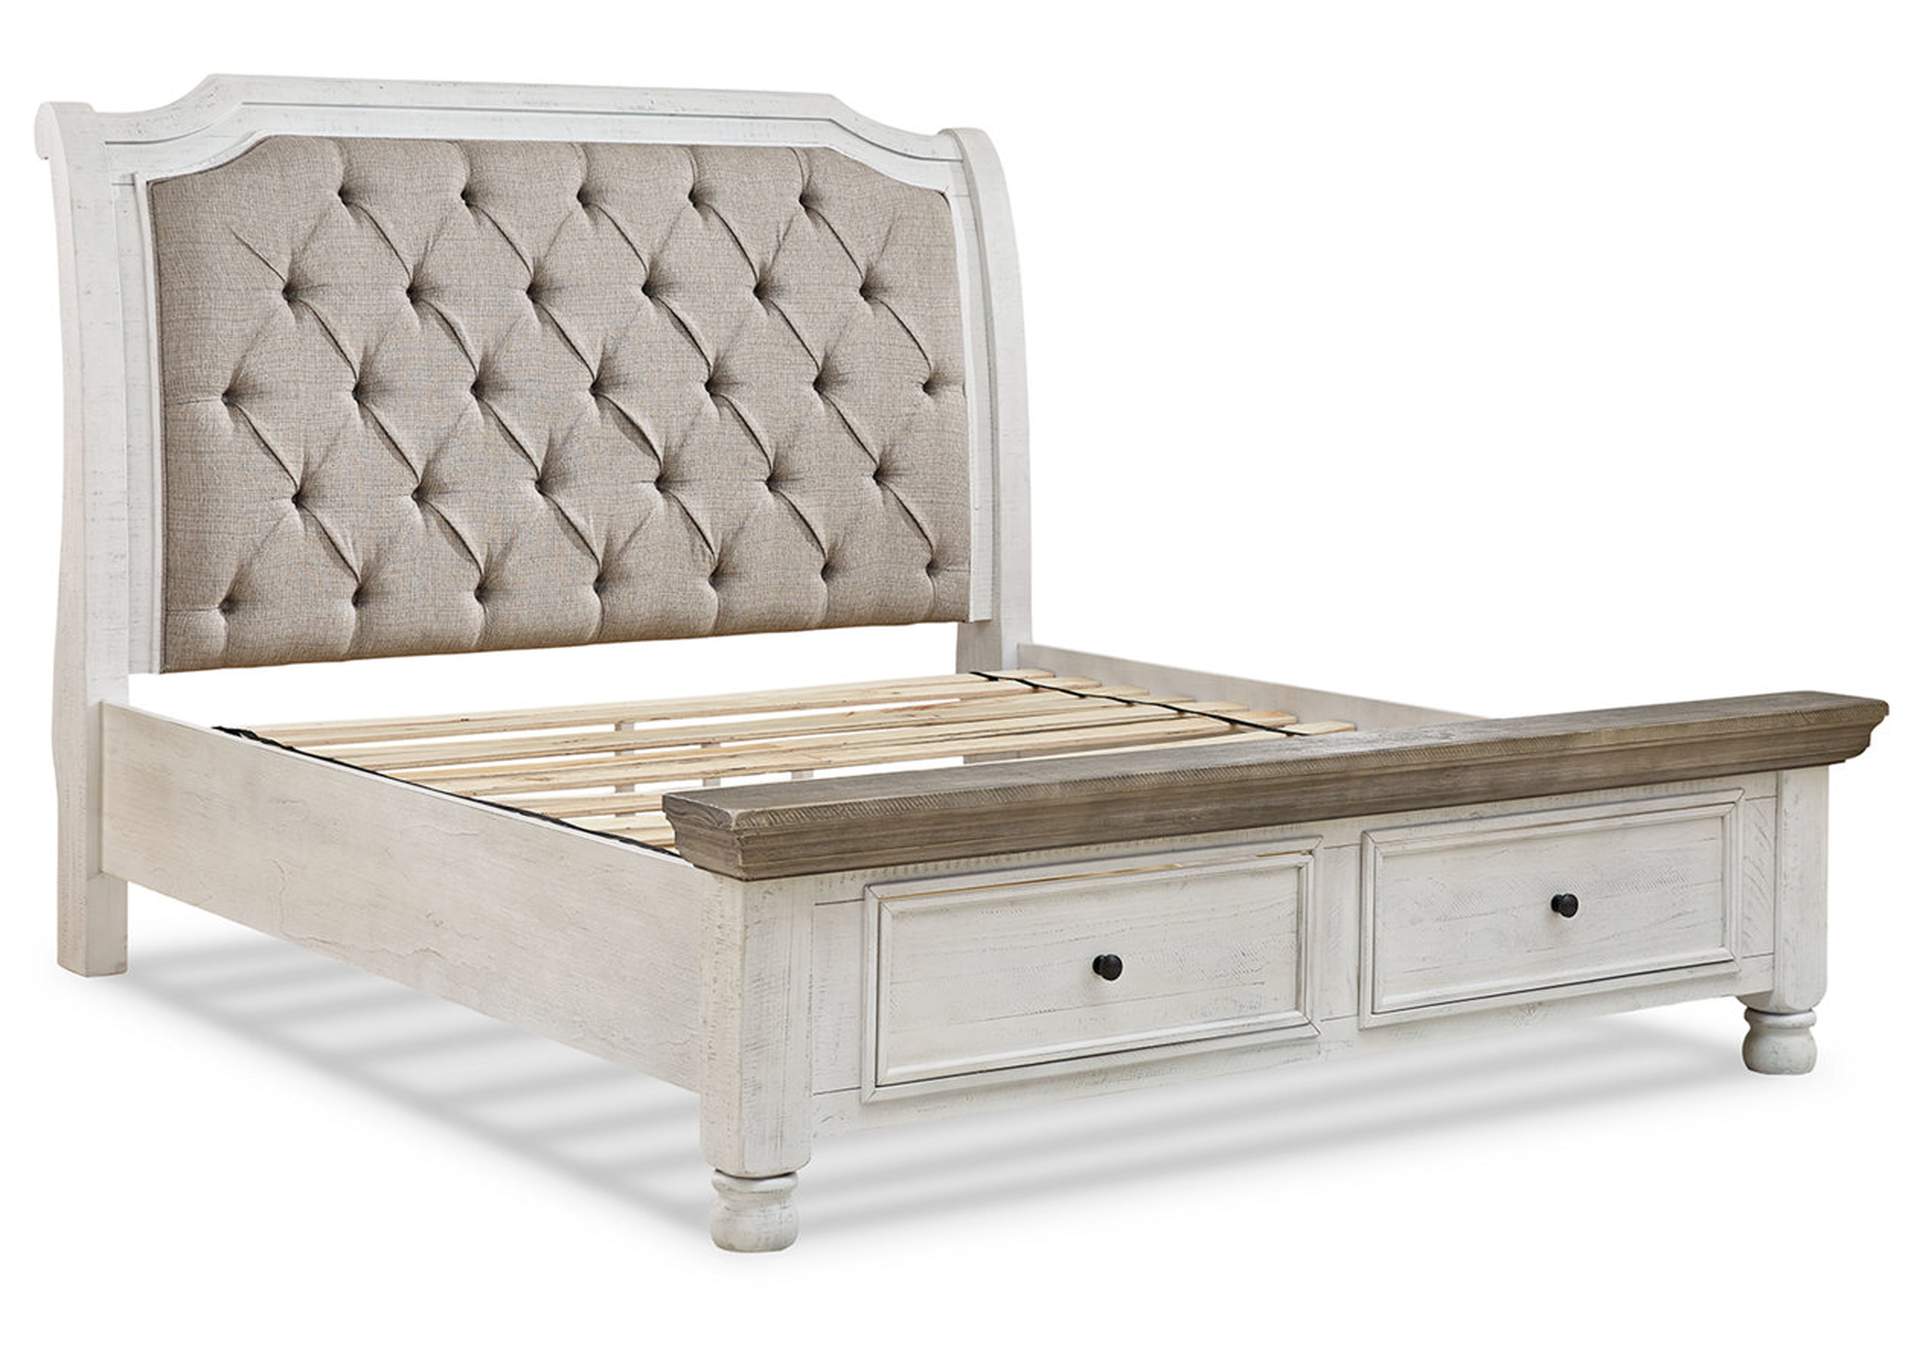 Havalance Queen Sleigh Bed with Storage with Mirrored Dresser and Chest,Millennium